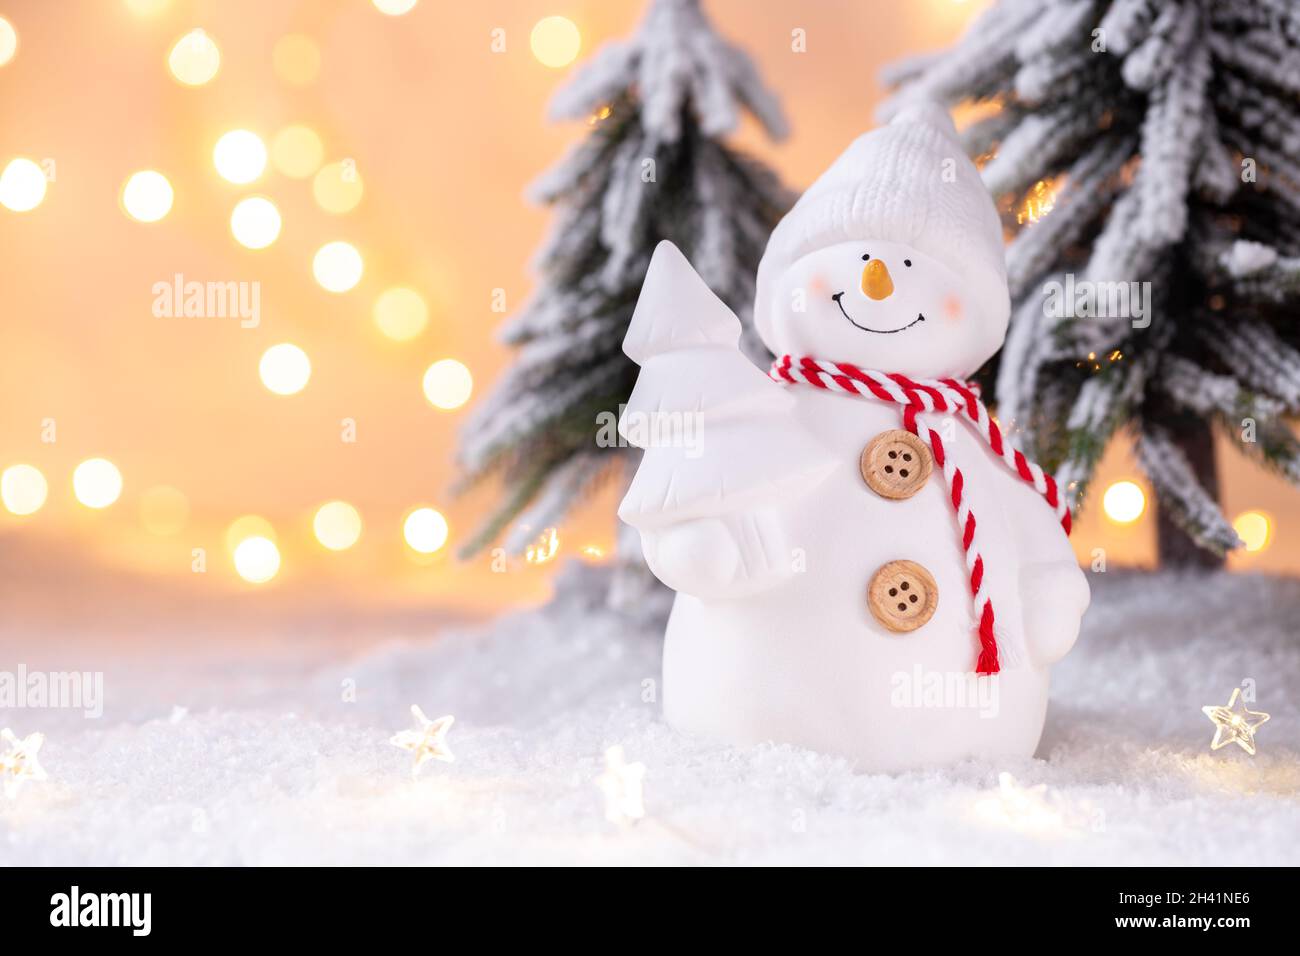 Snowman toy on the snow Stock Photo